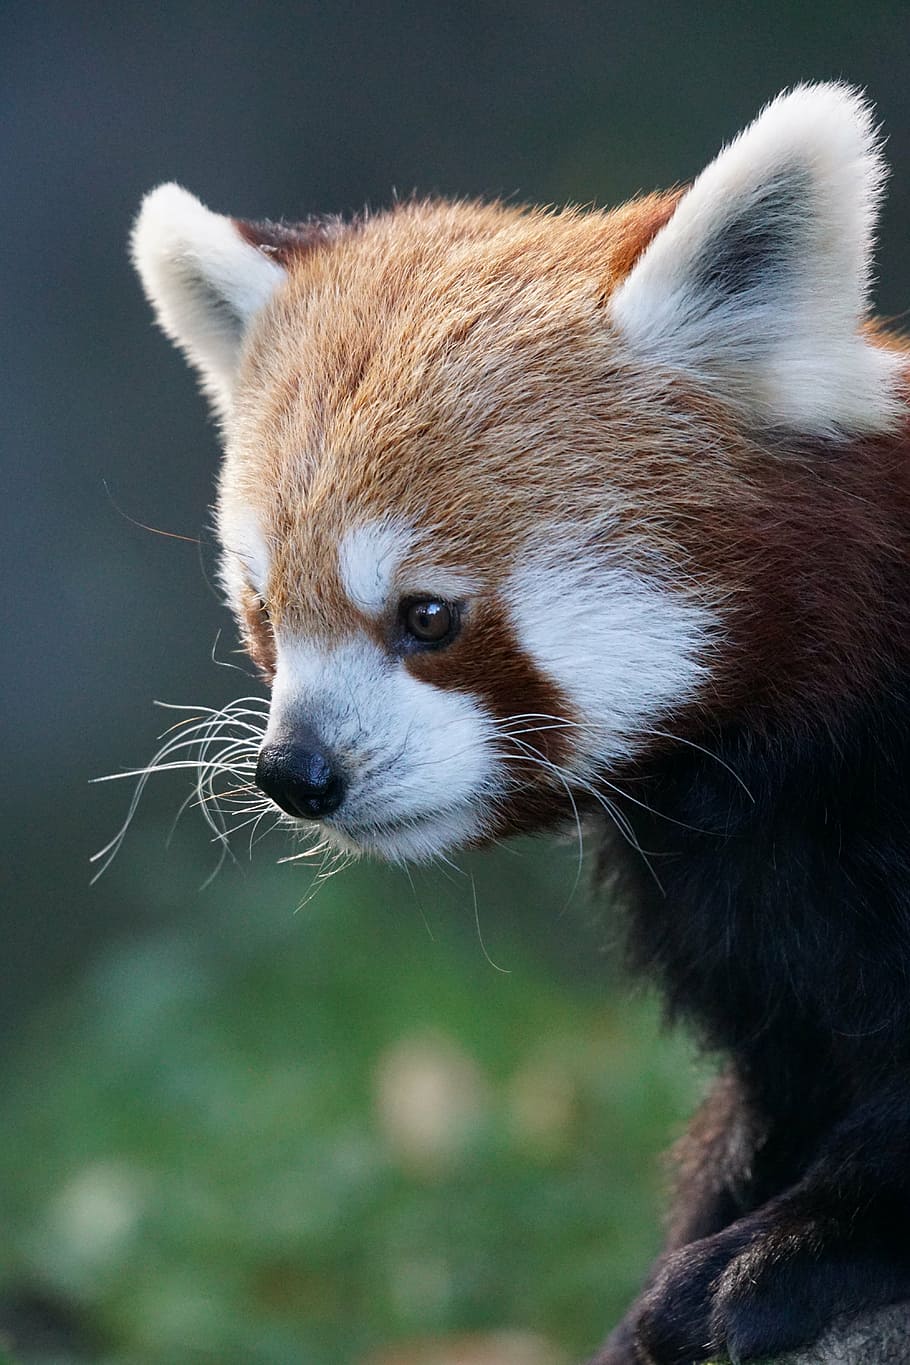 selective, focus photo, red, panda, red panda, fire fox, gold dog, cute, animal world, close